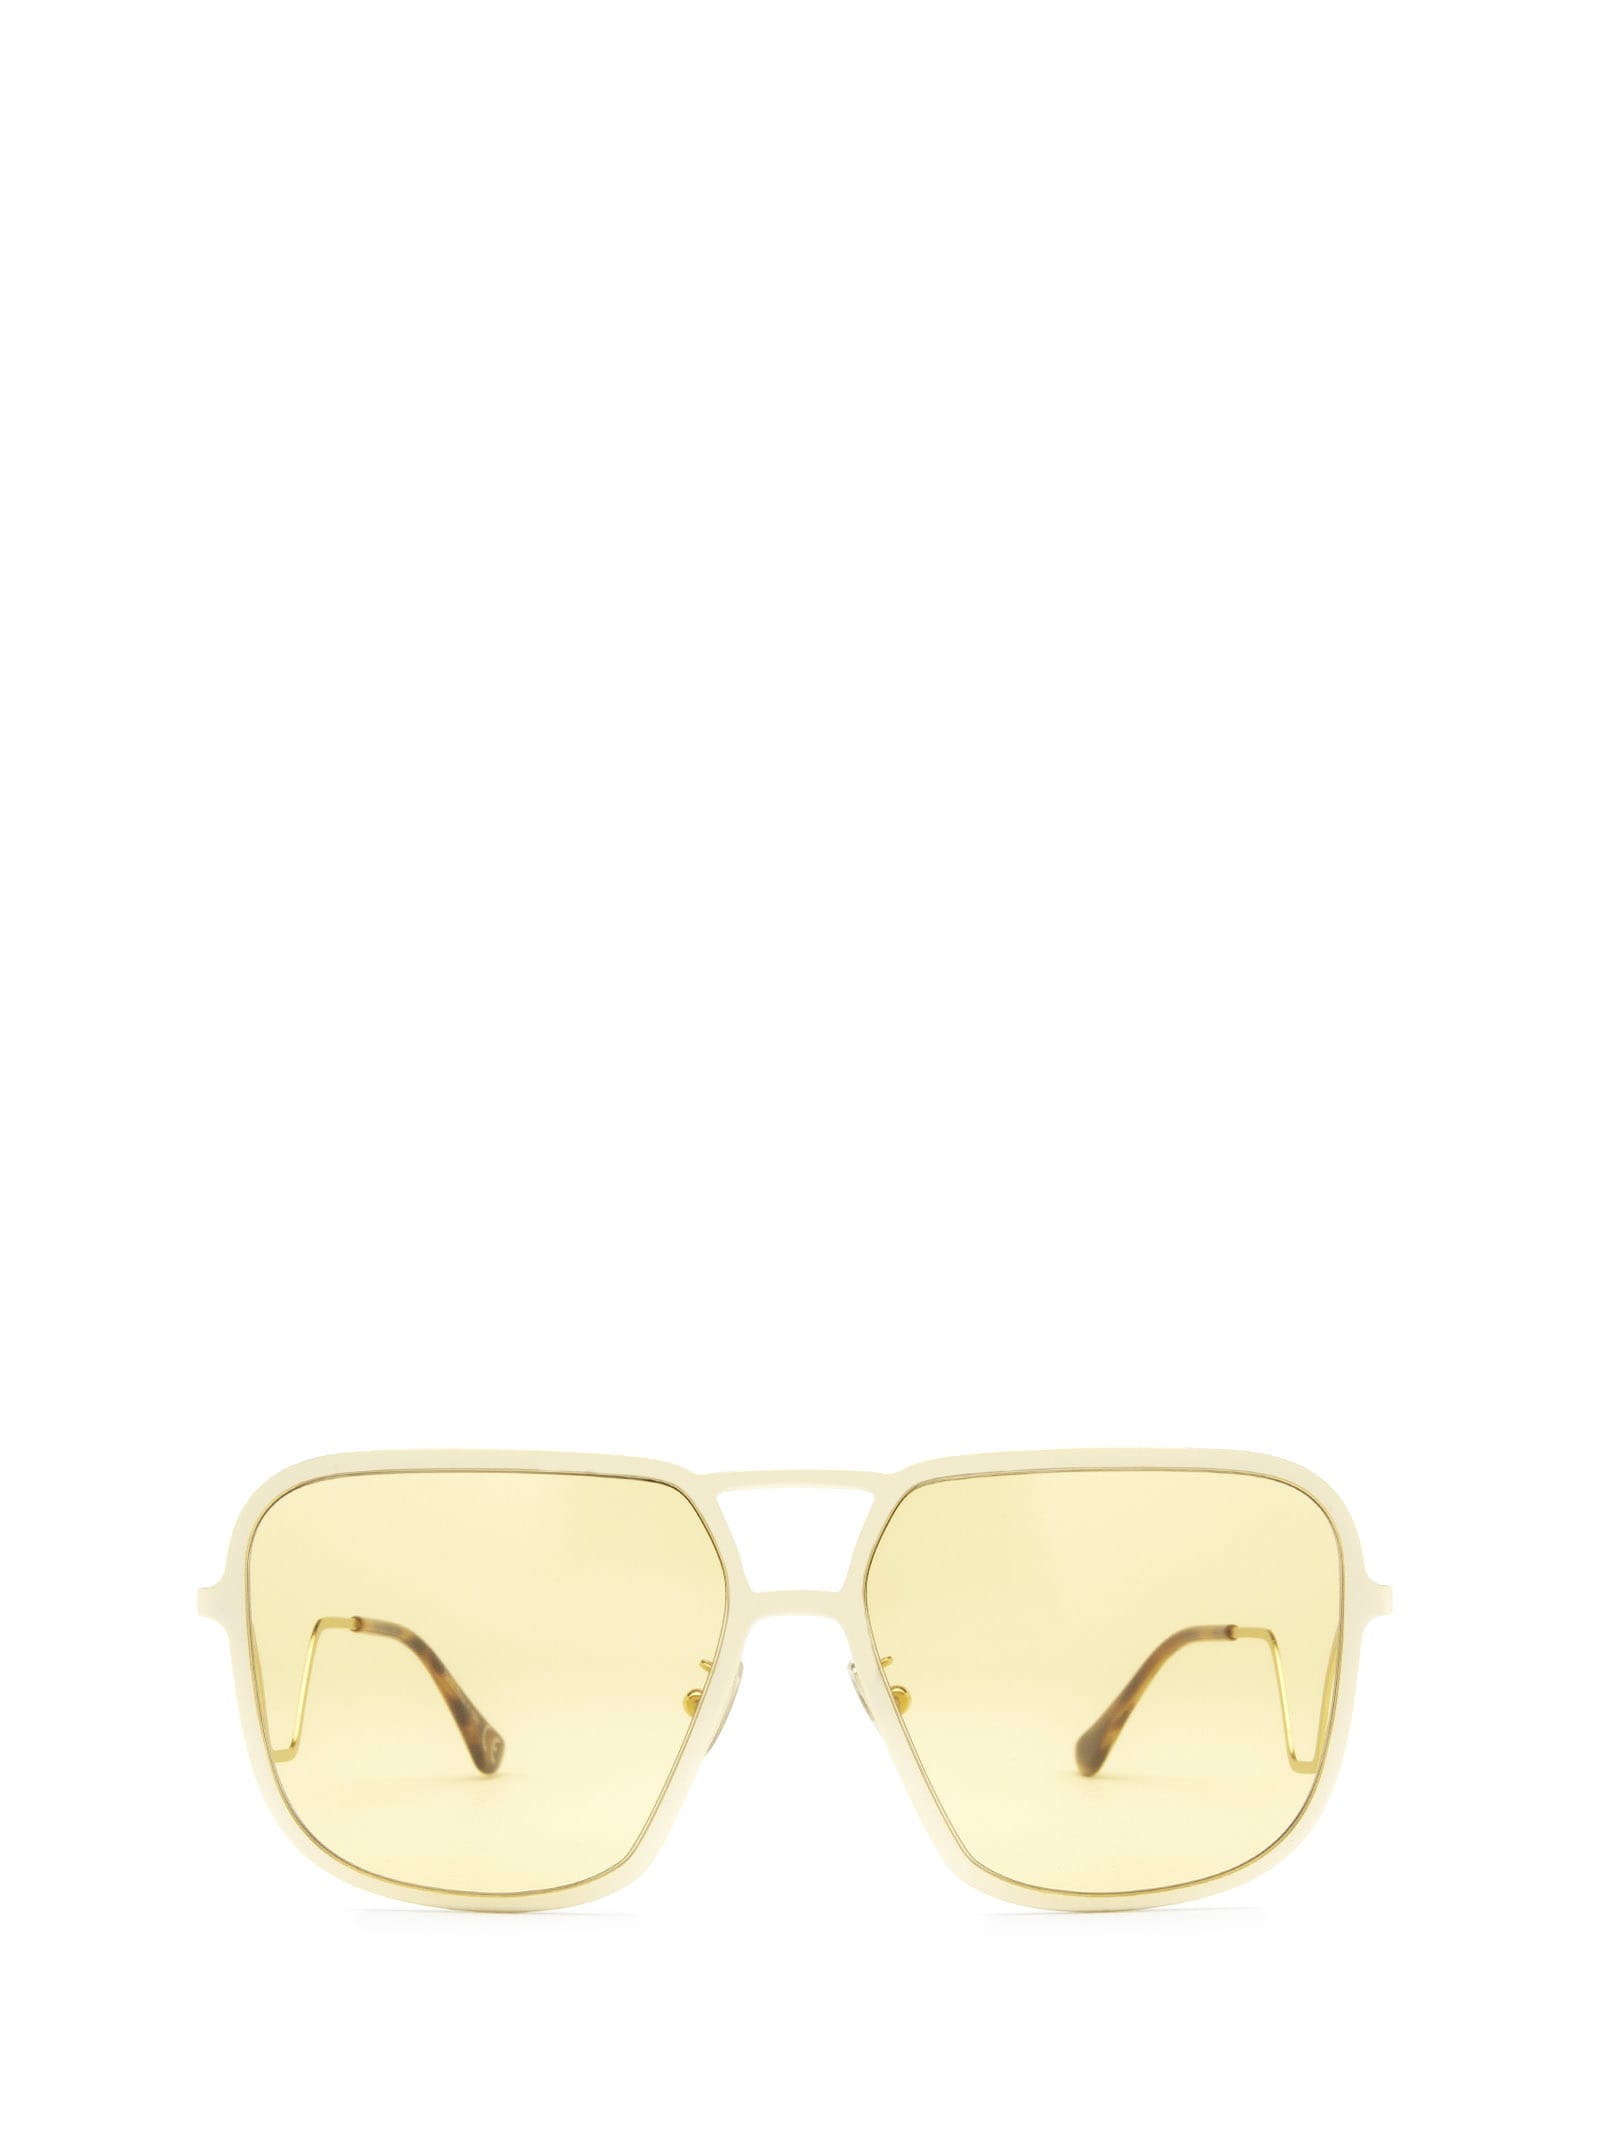 Marni Eyewear Ha Long Bay Yellow Sunglasses